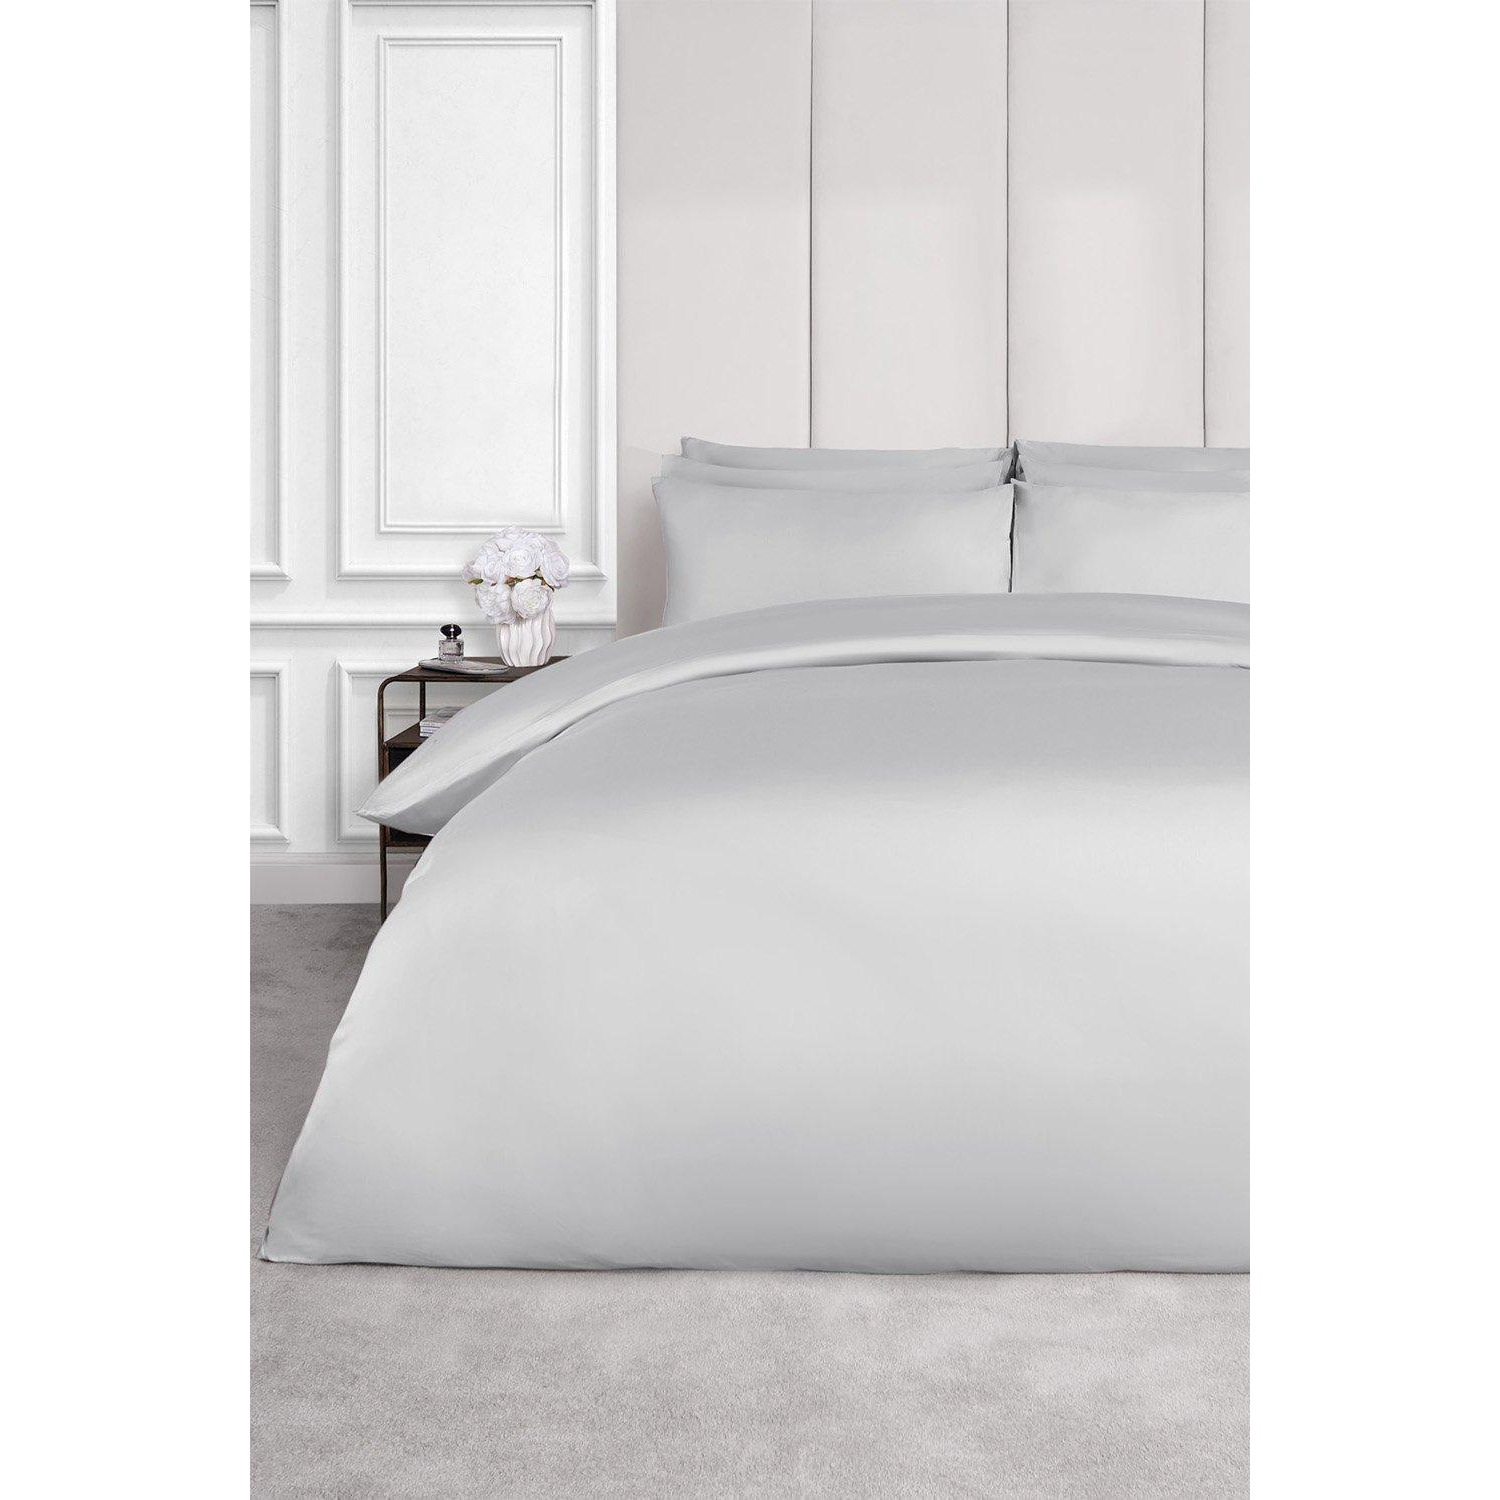 220 Thread Count Hotel Luxury Premium Quality Cotton Soft Duvet Cover Set - image 1